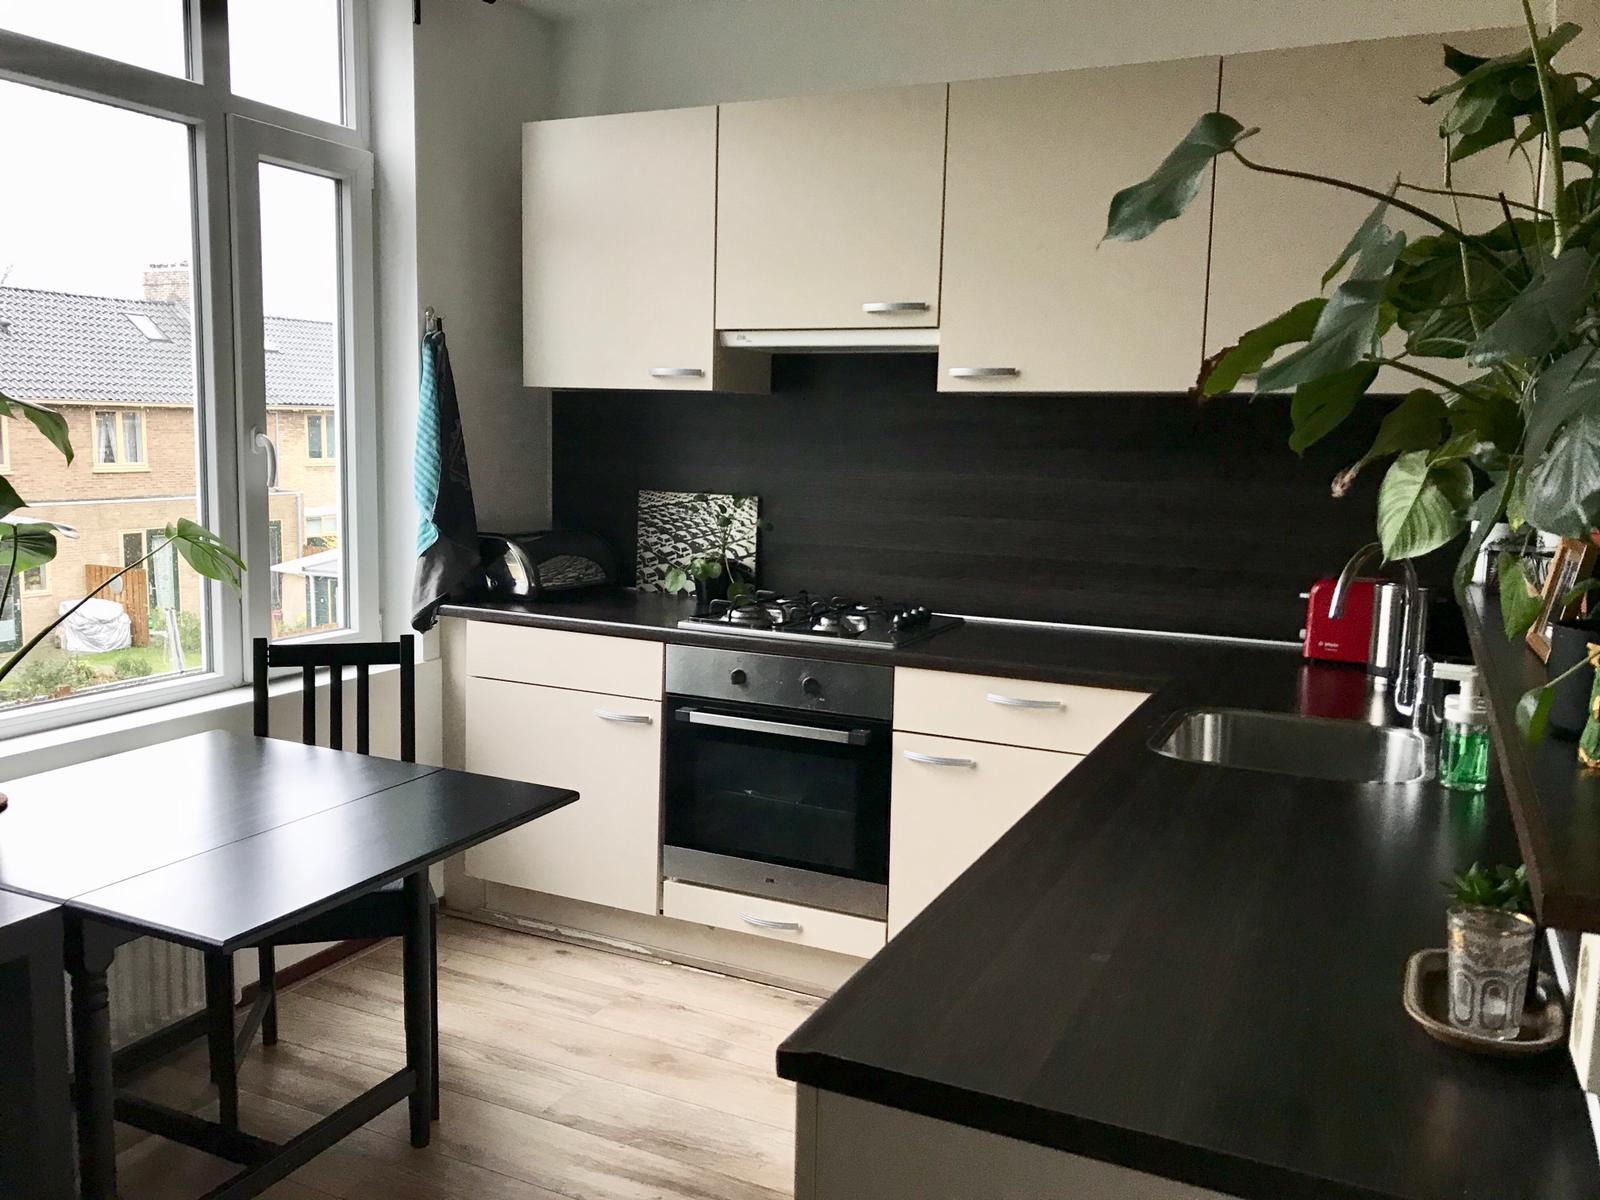 Woning / appartement - Rotterdam - Strevelsweg 24